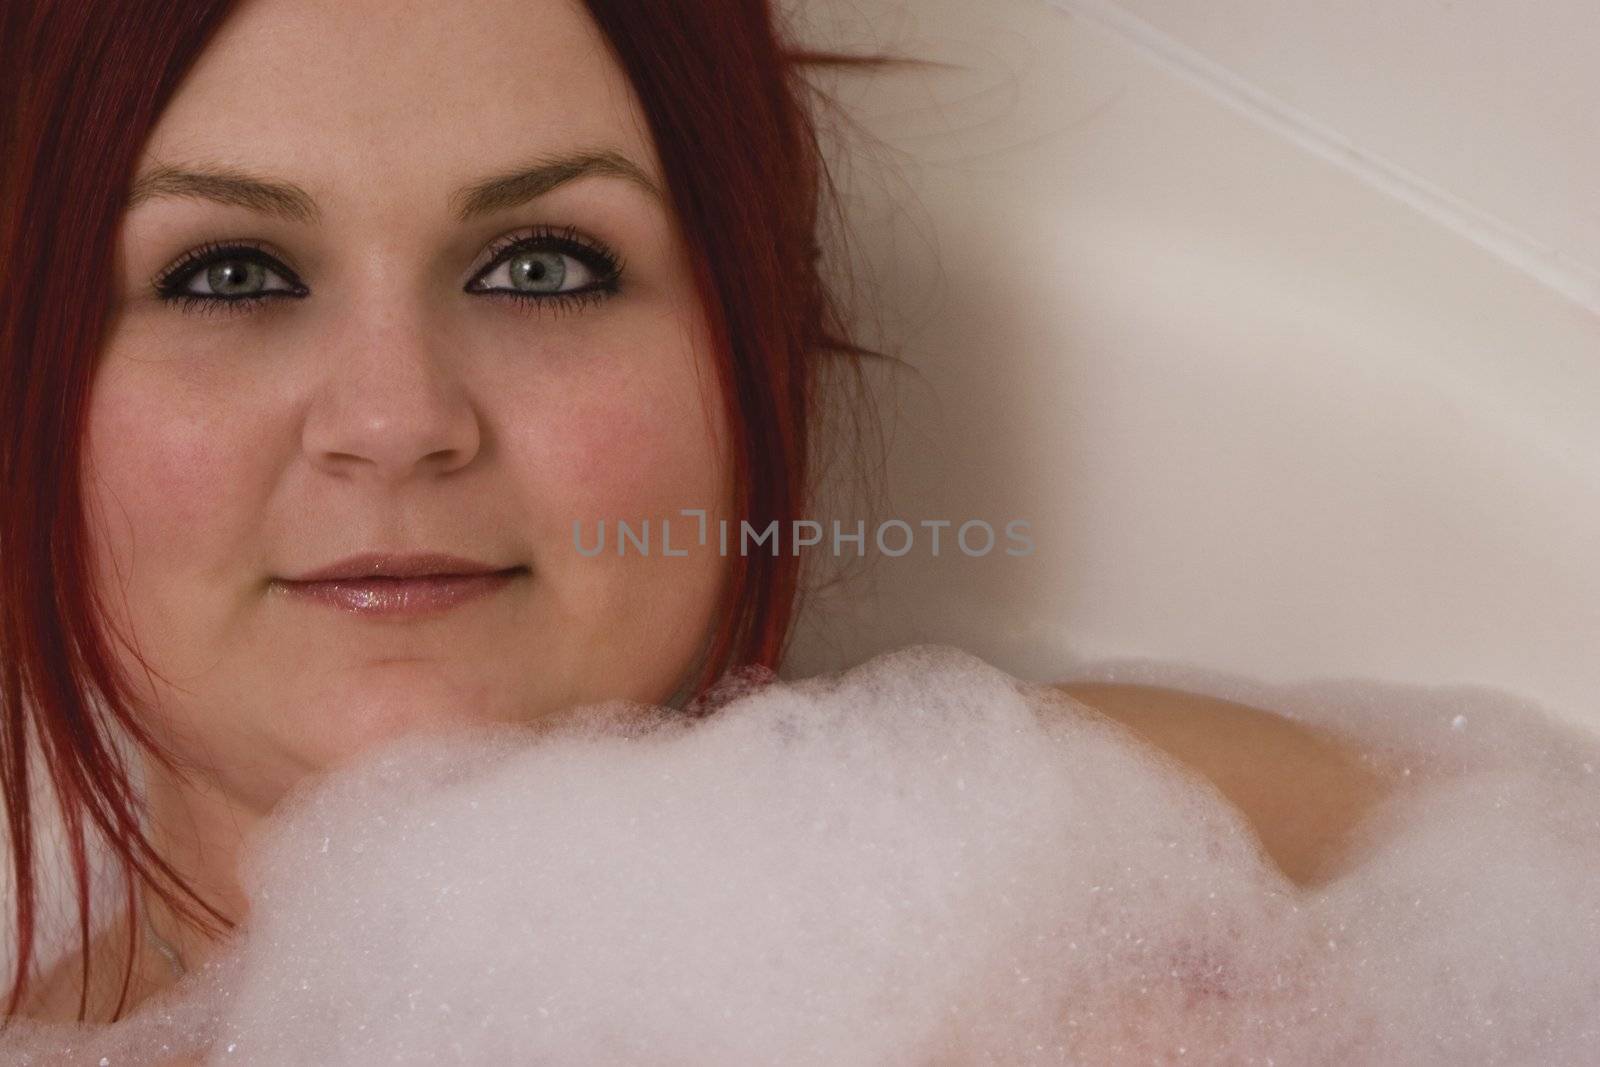 Red hair model in bath by mypstudio